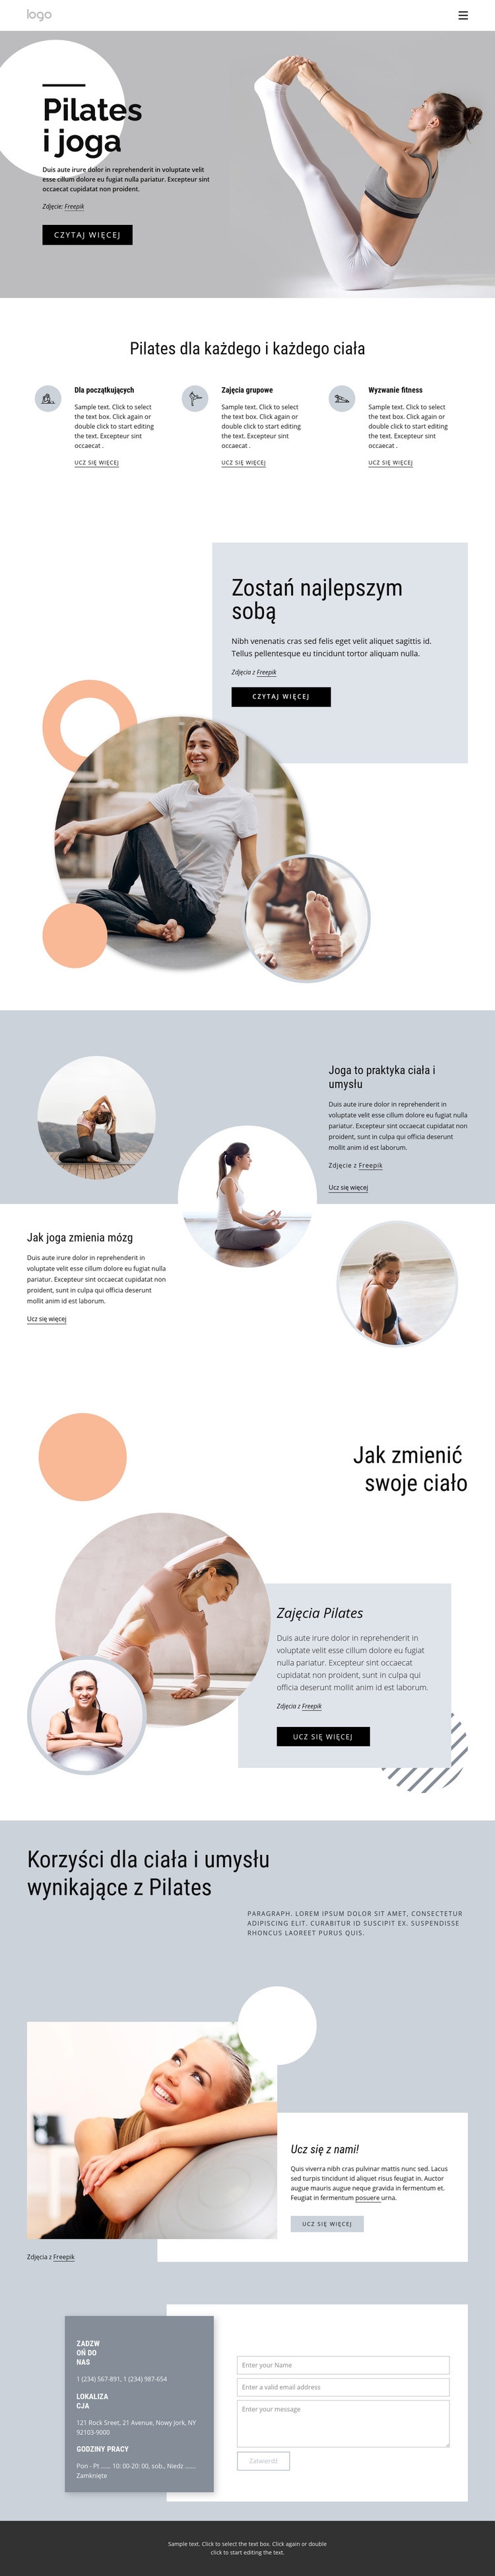 Pilates i centrum jogi Projekt strony internetowej